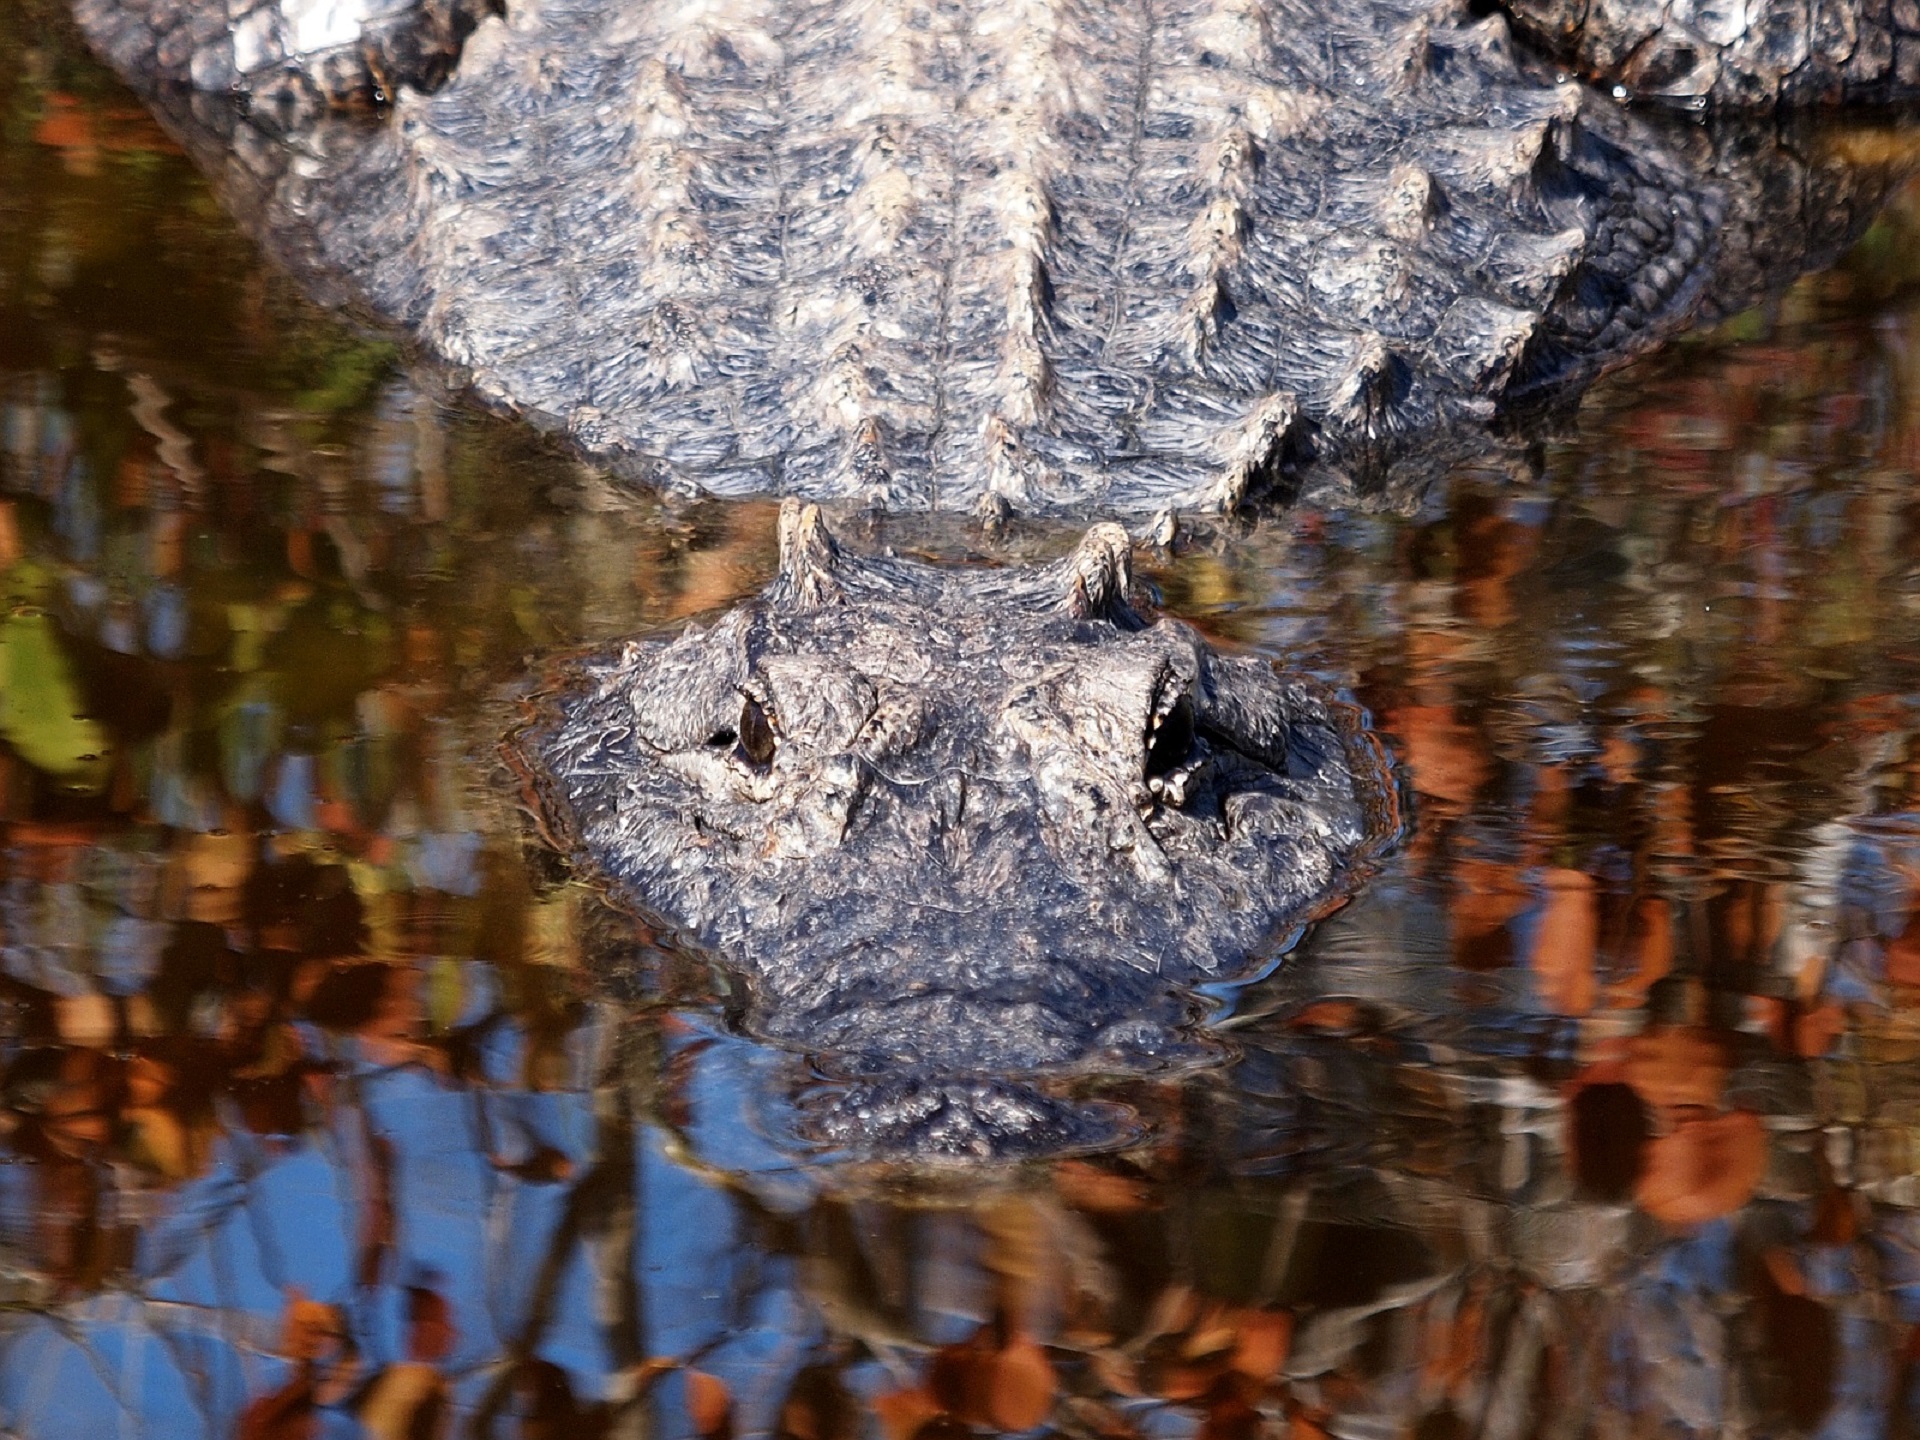 Alligator in the river photo